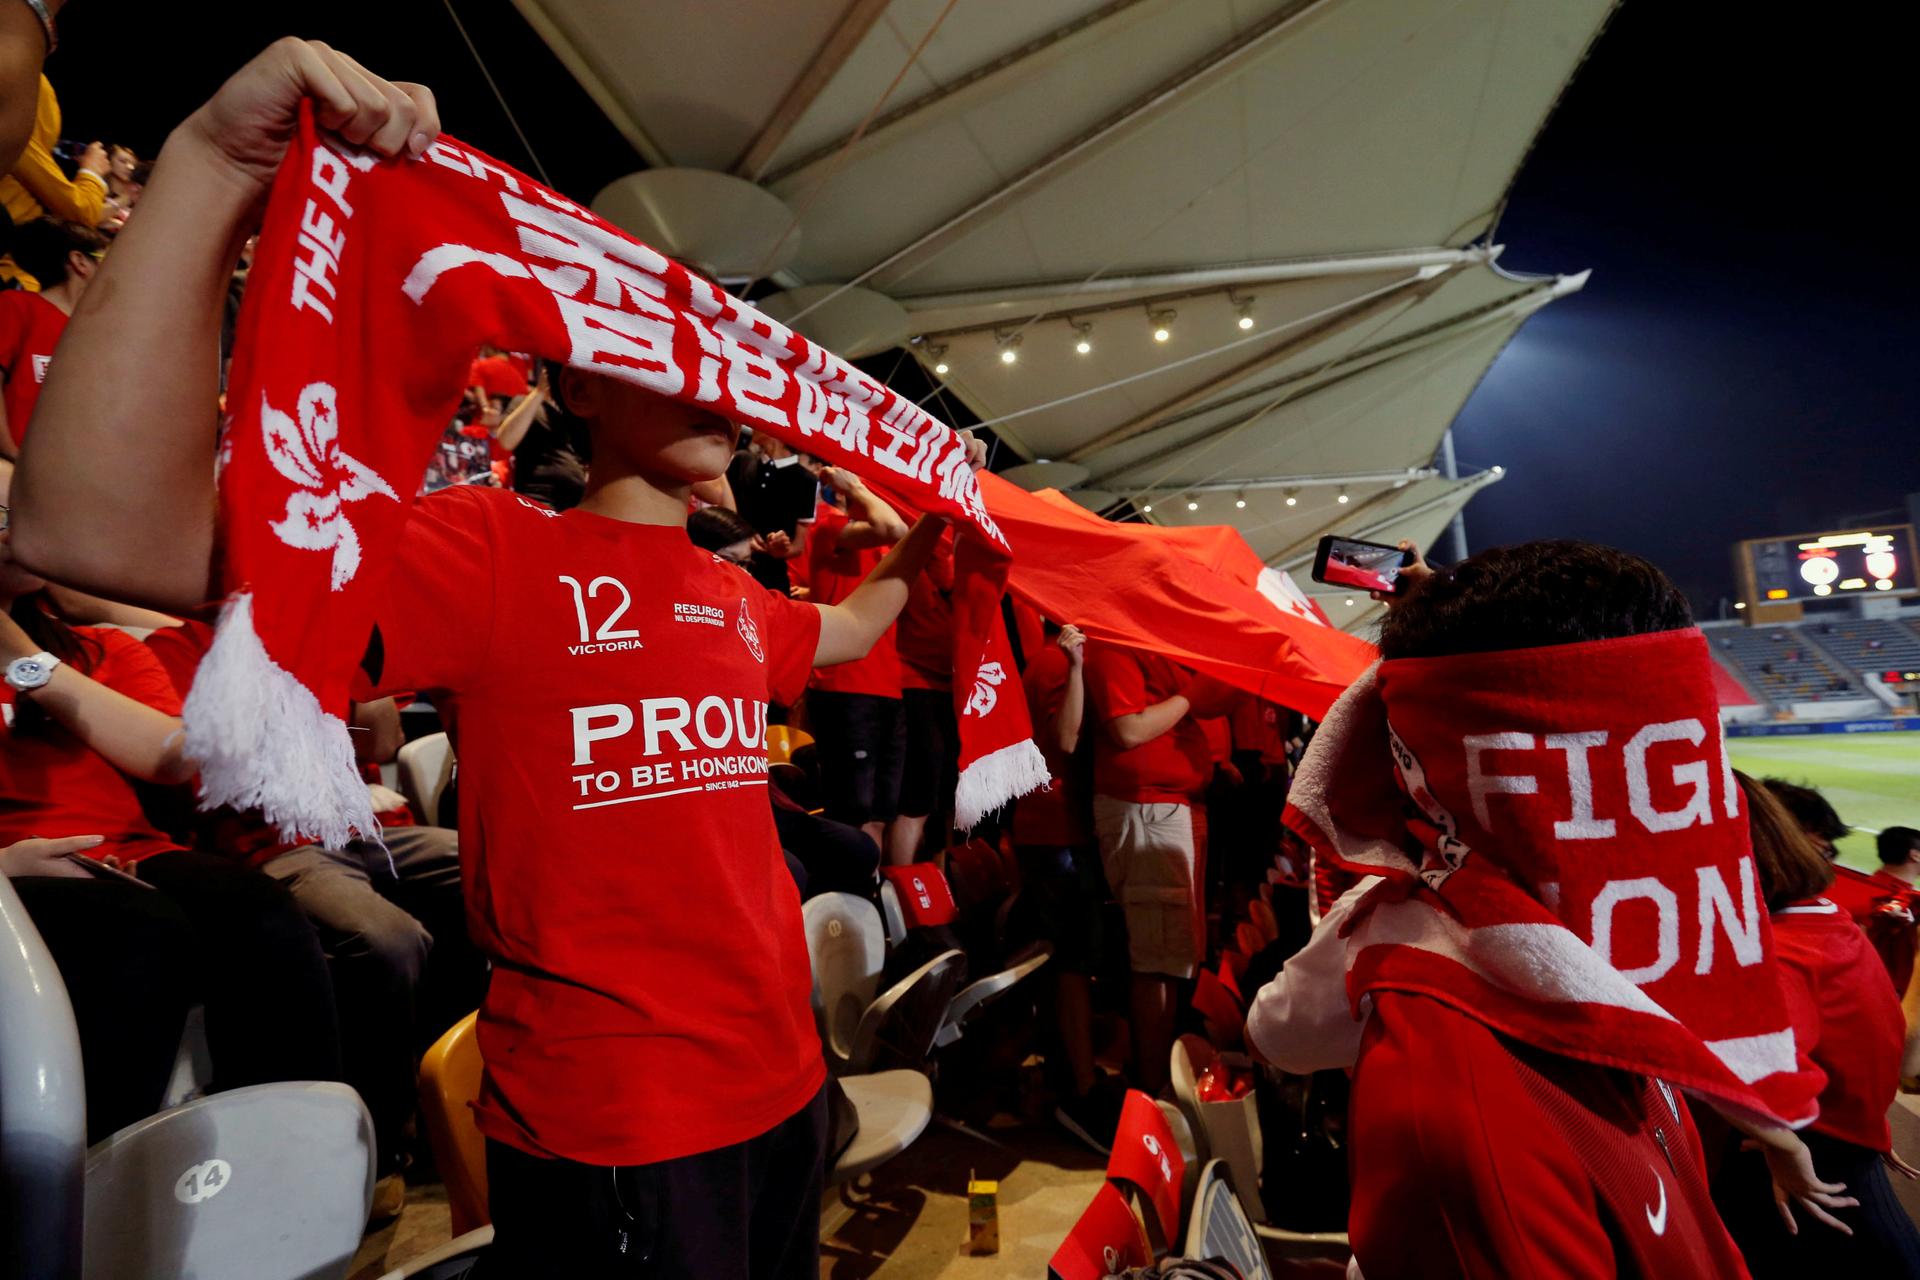 Hong Kong fans cover their faces and boo during the Chinese national anthem, at a friendly soccer match between Hong Kong and Bahrain in Hong Kong, China, November 9, 2017. 